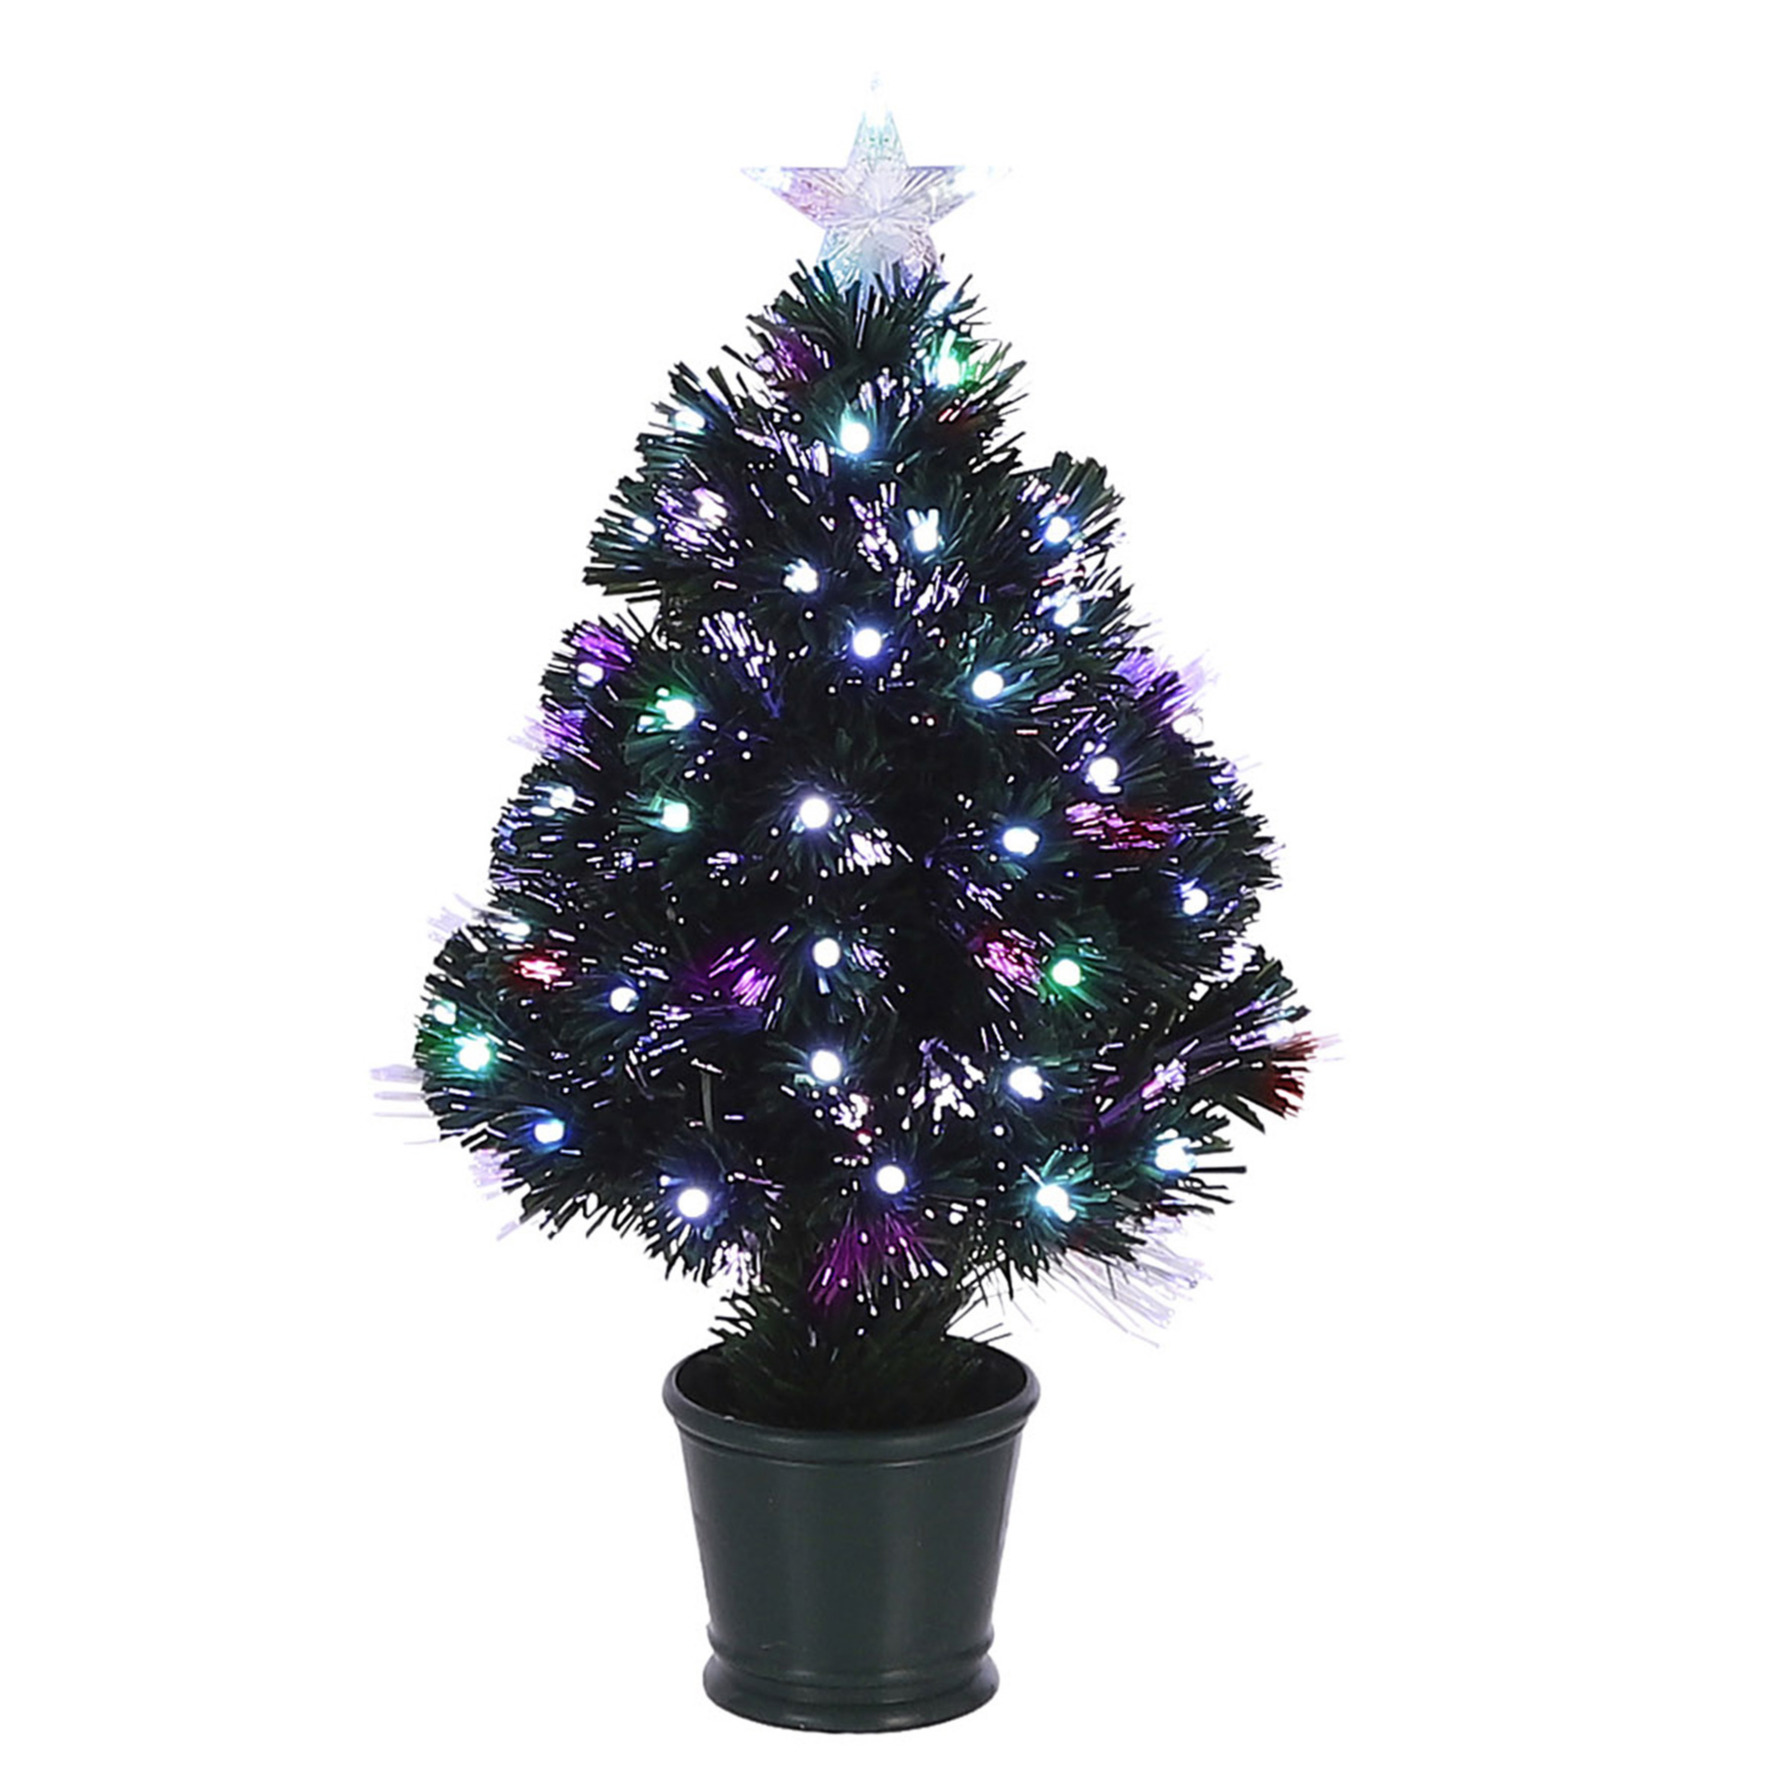 Fiber optic kerstboom-kunst kerstboom met knipperende verlichting en piek ster 60 cm